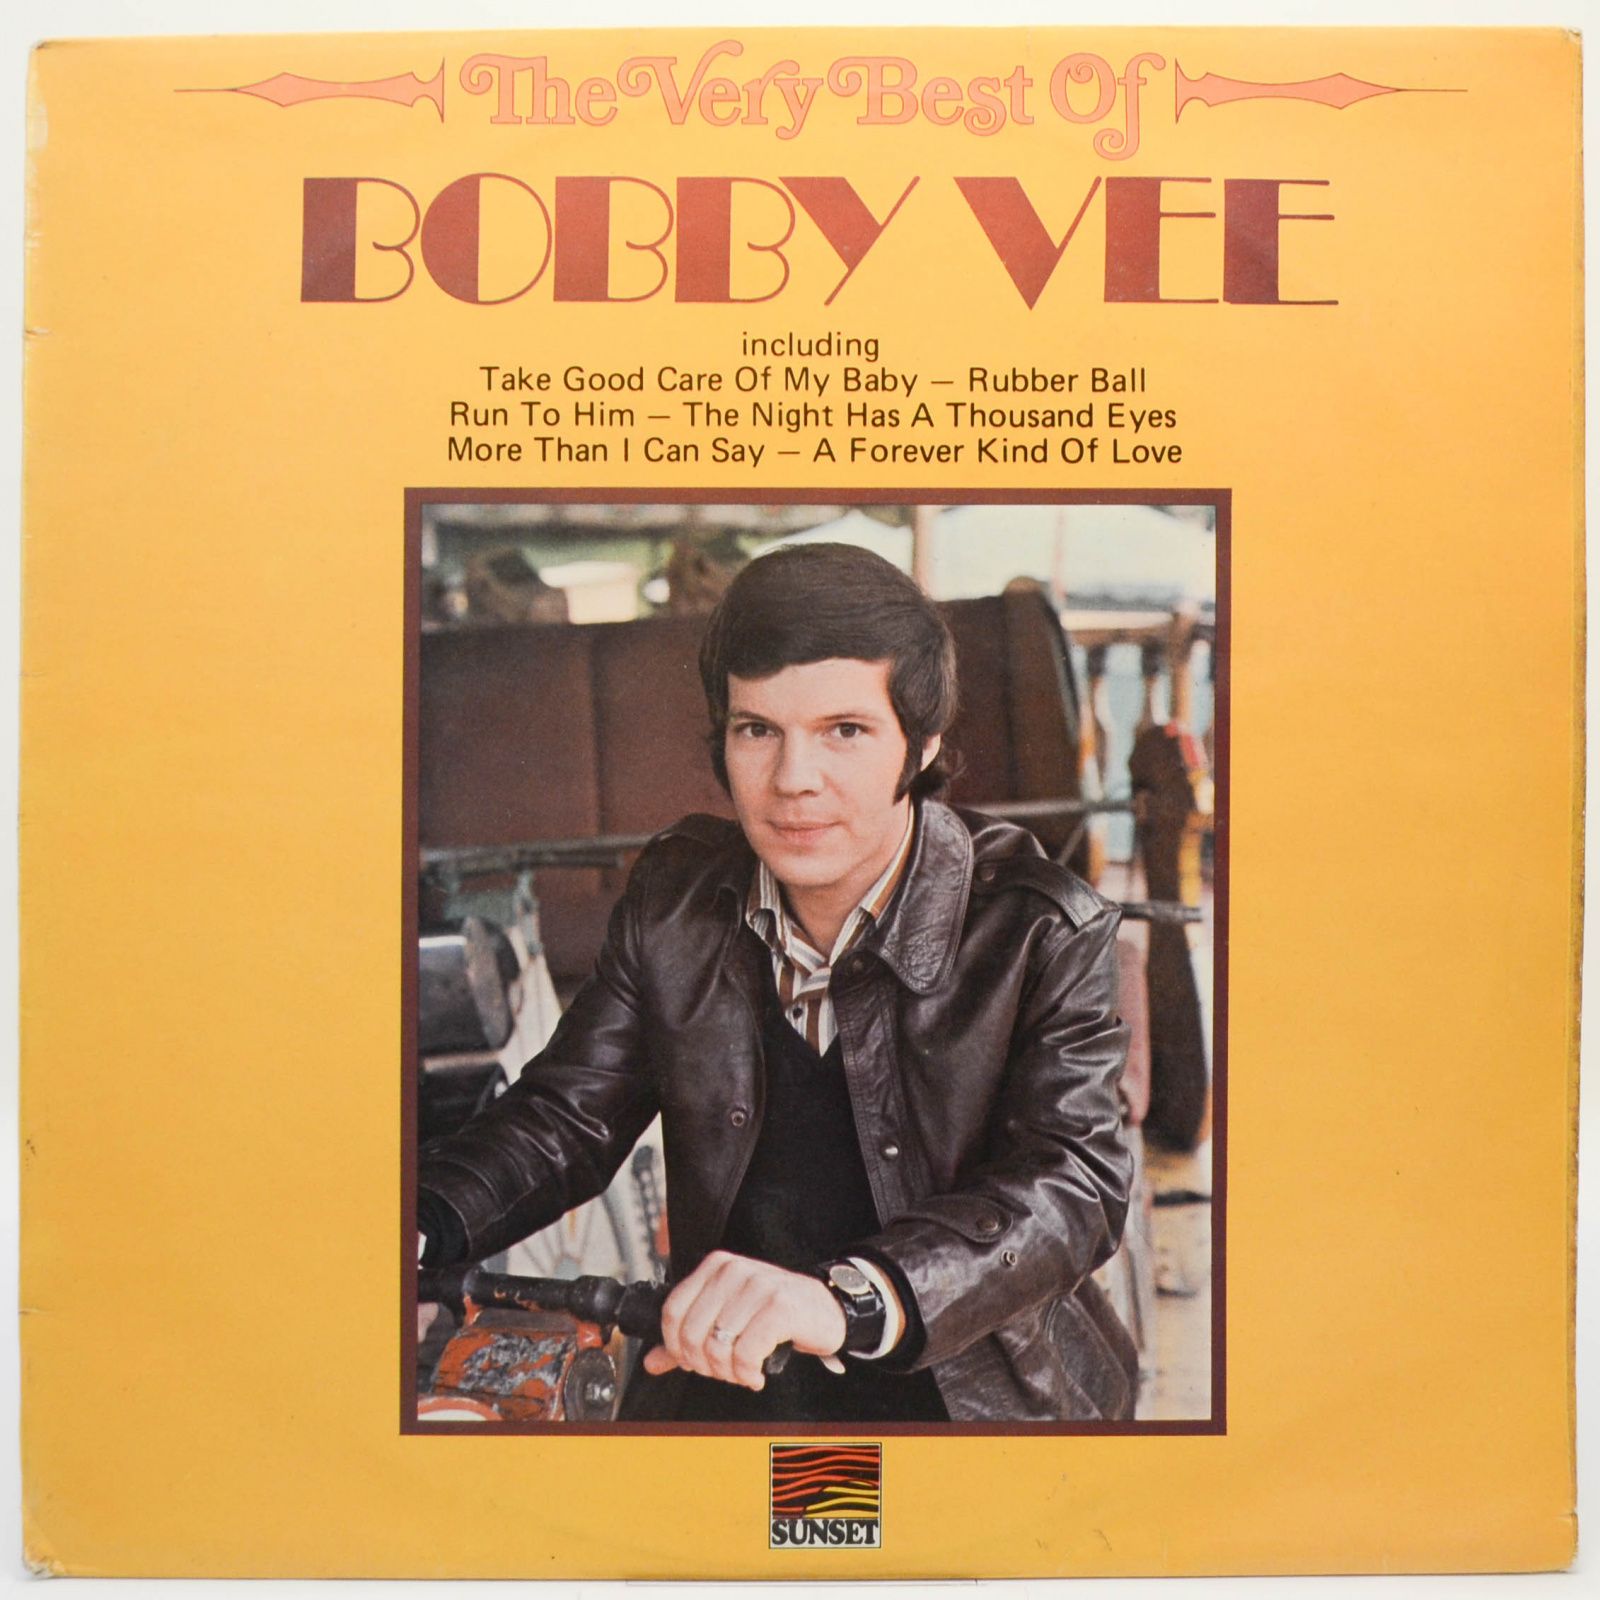 The Very Best Of Bobby Vee, 1974